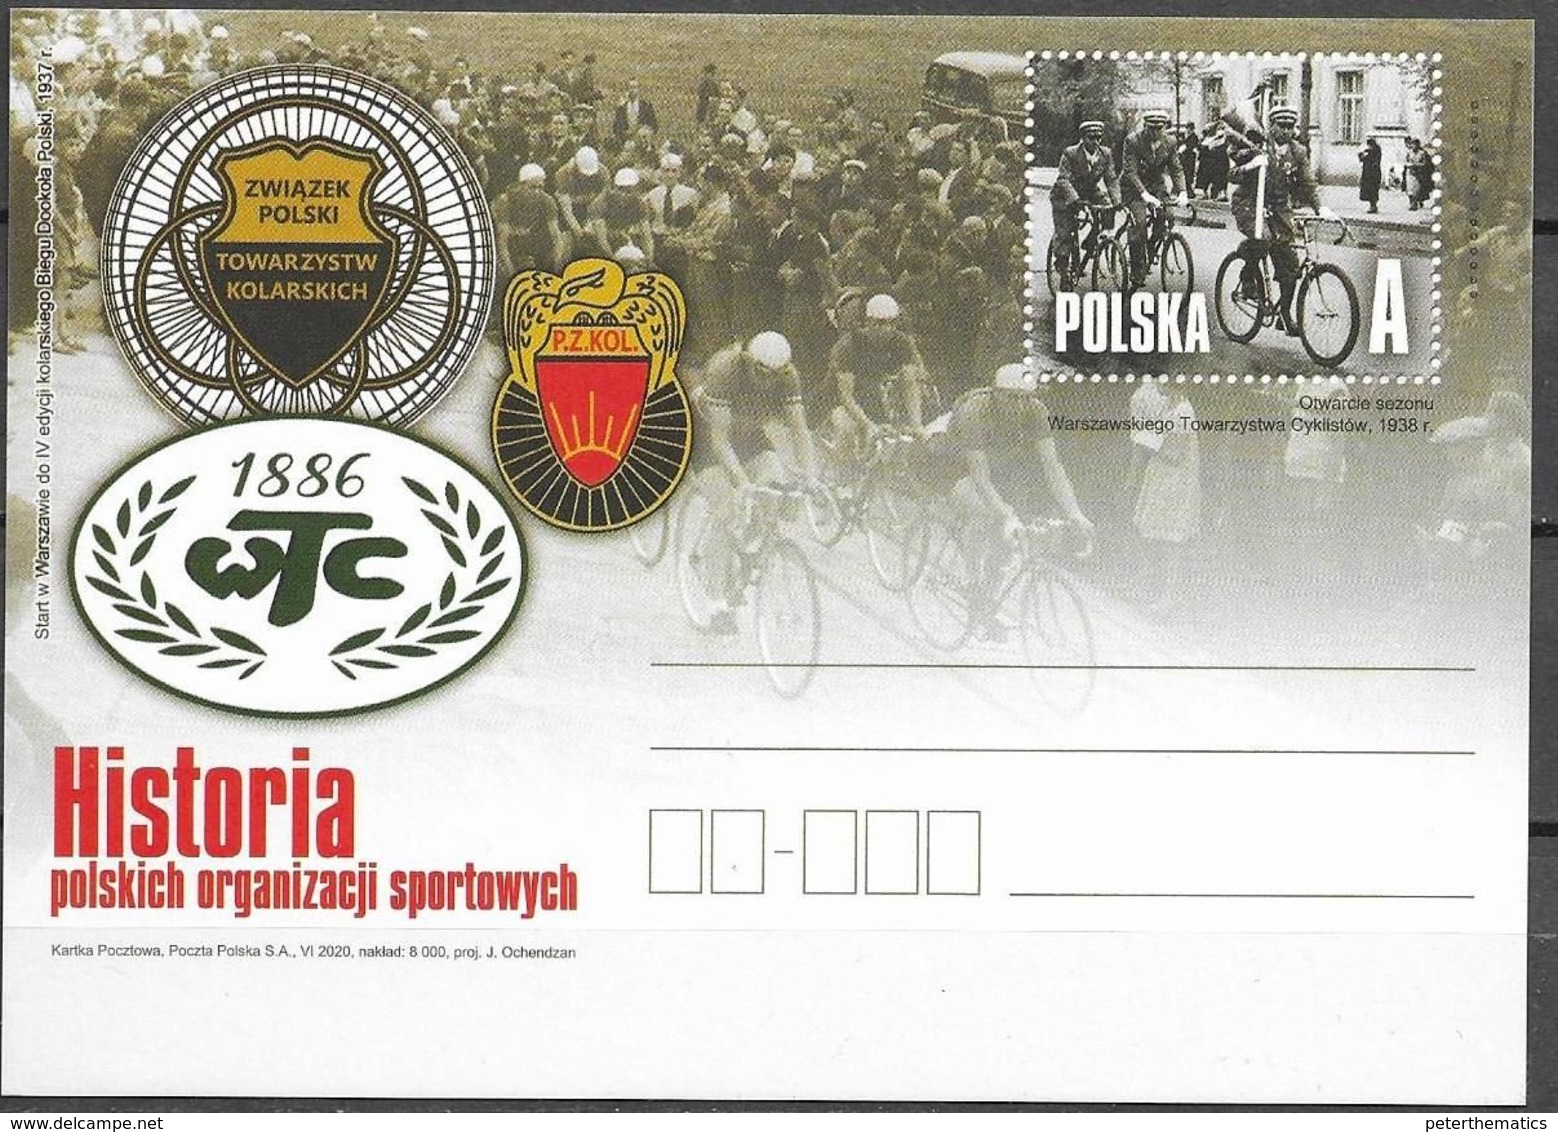 POLAND, 2020, MINT POSTAL STATIONERY, PREPAID POSTCARD, CYCLING, BICYCLES, HISTORY OF POLISH SPORT ORGANIZATIONS - Radsport